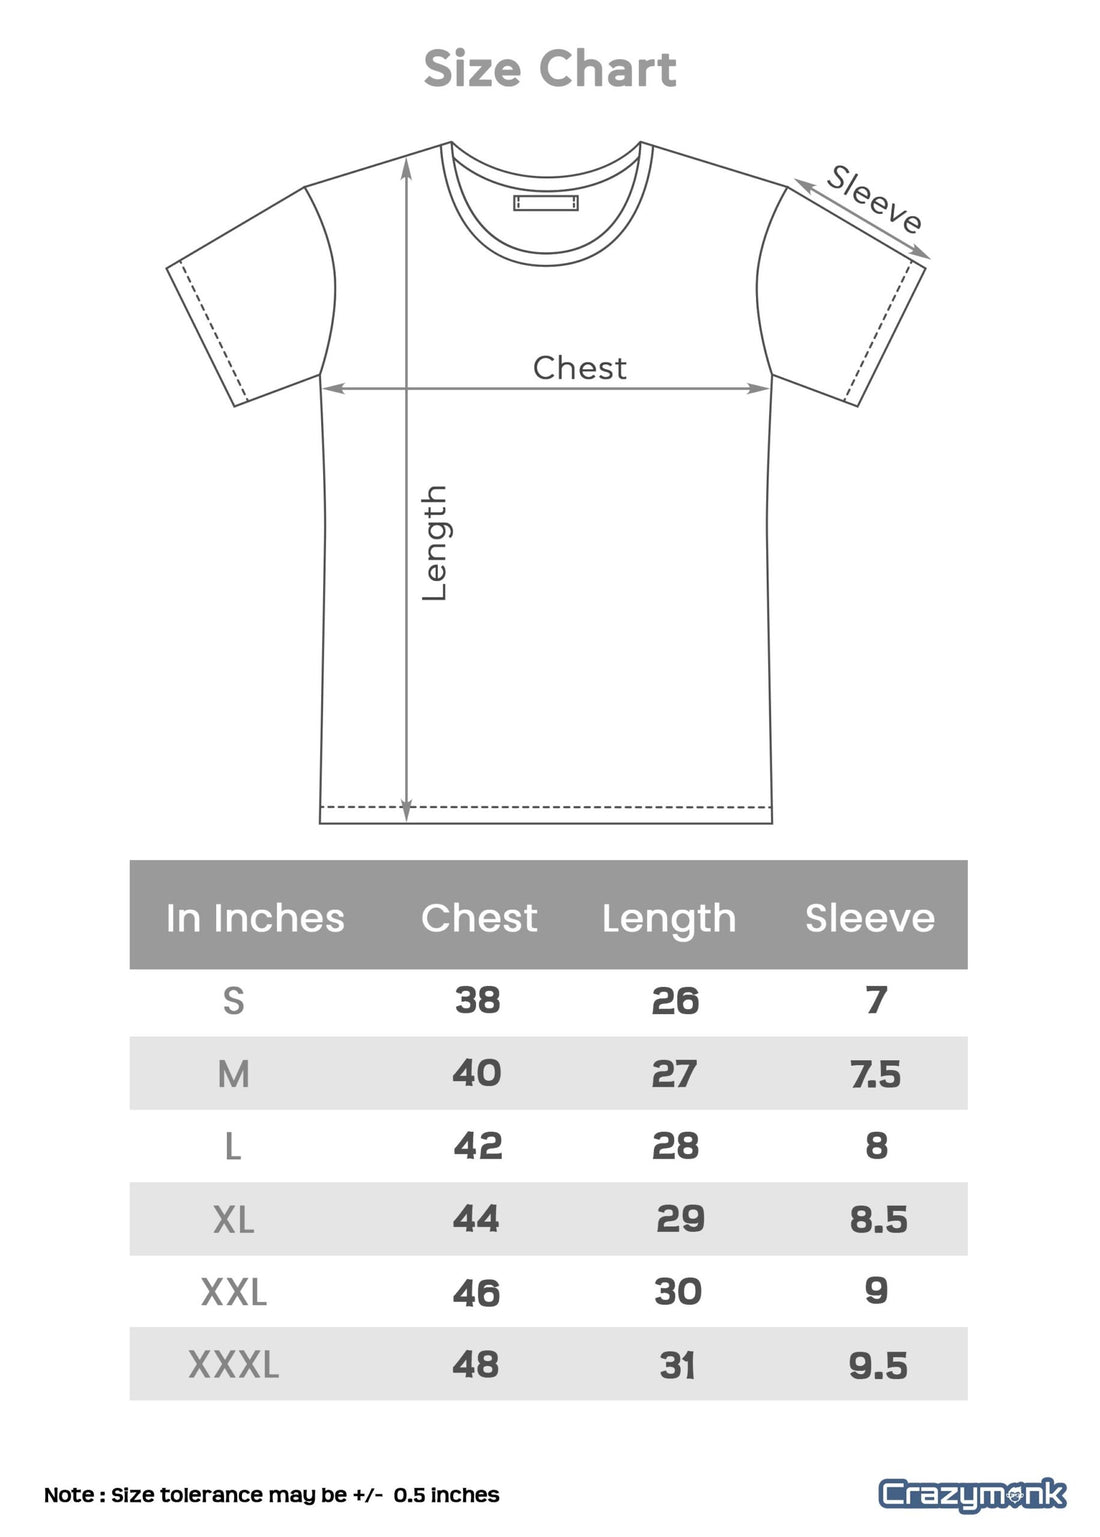 Coding girl Unisex Half Sleeve T-Shirt